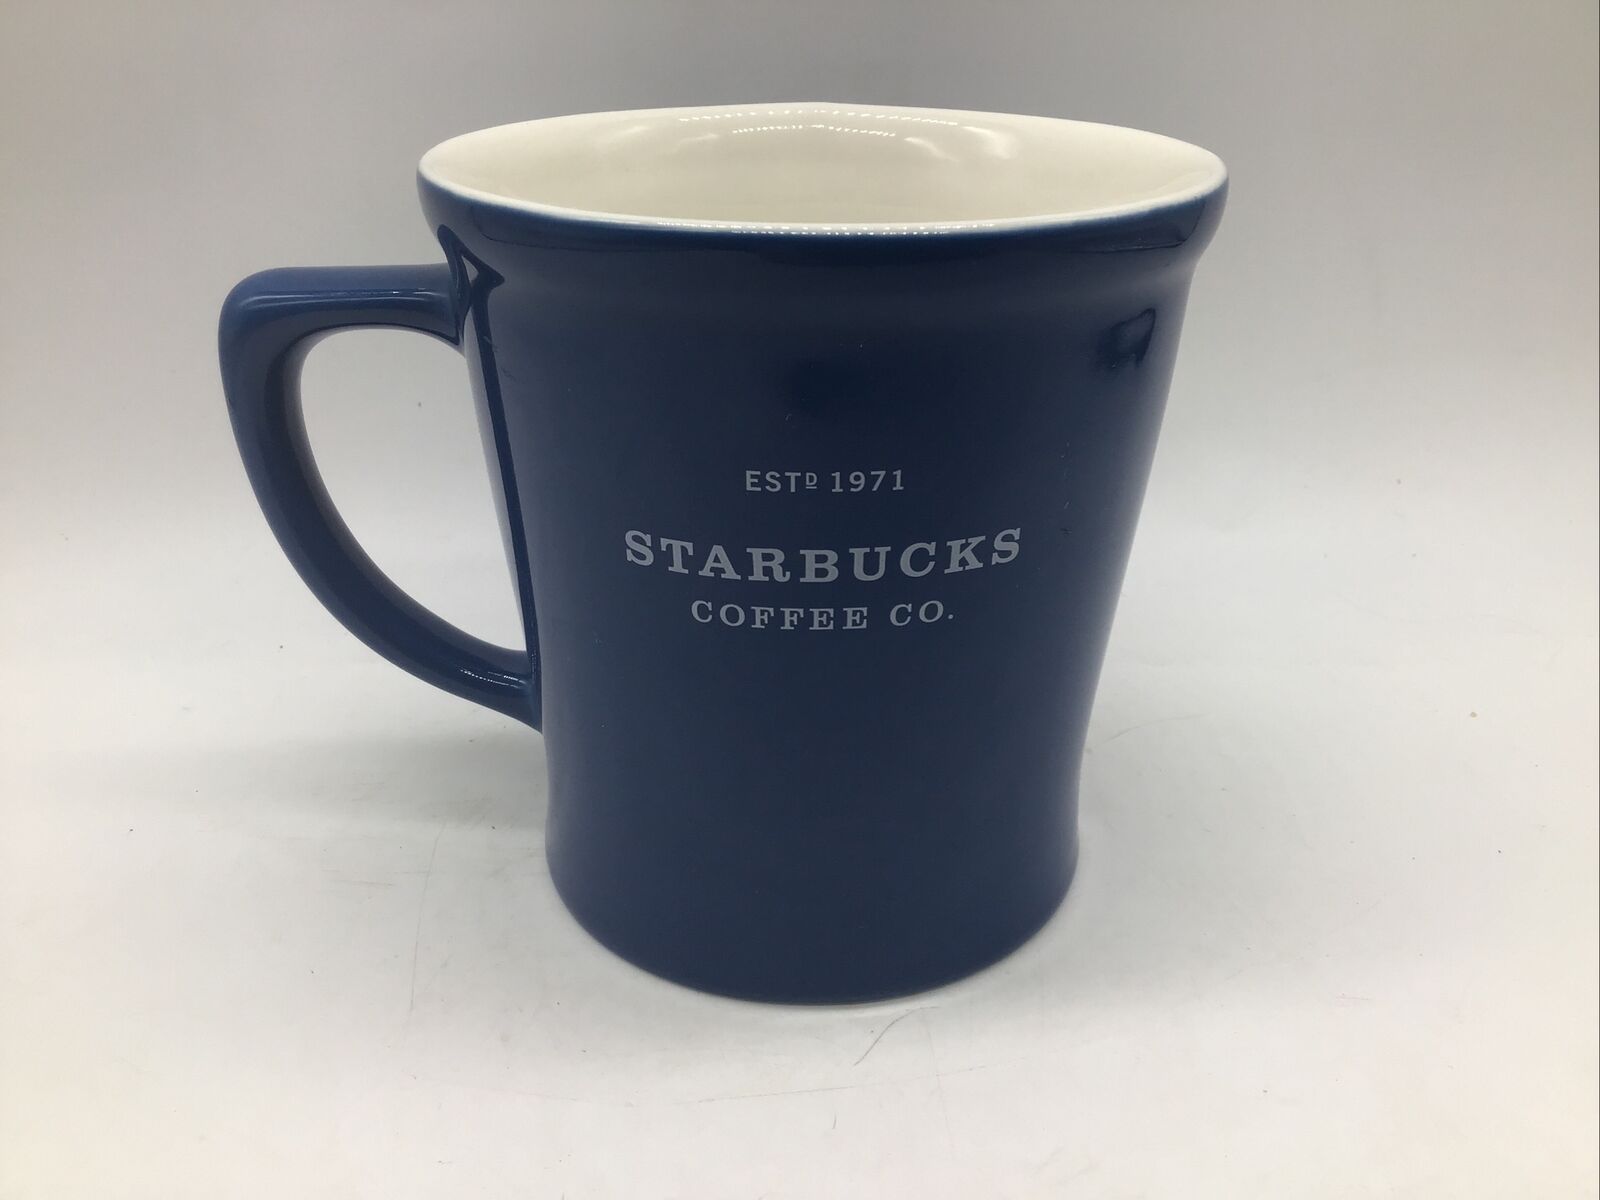 2008 Starbucks Coffee Co. Est. 1971 Blue Mug/Cup 18oz. Oversized Nice Condition